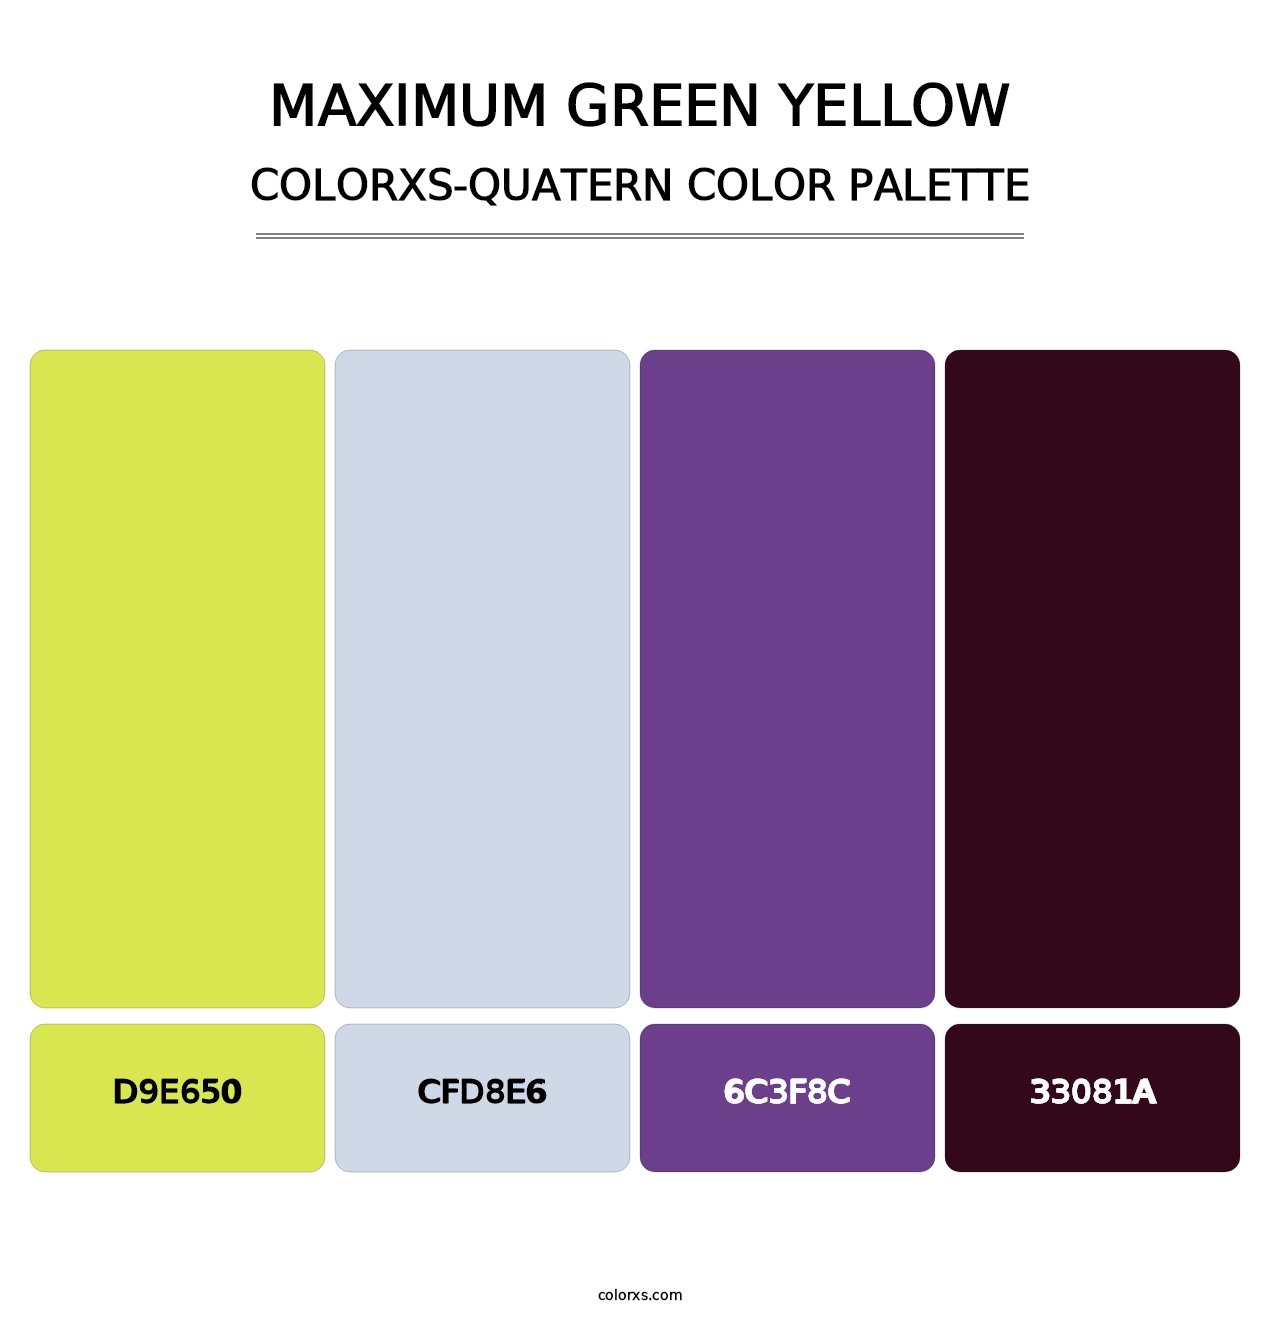 Maximum Green Yellow - Colorxs Quatern Palette